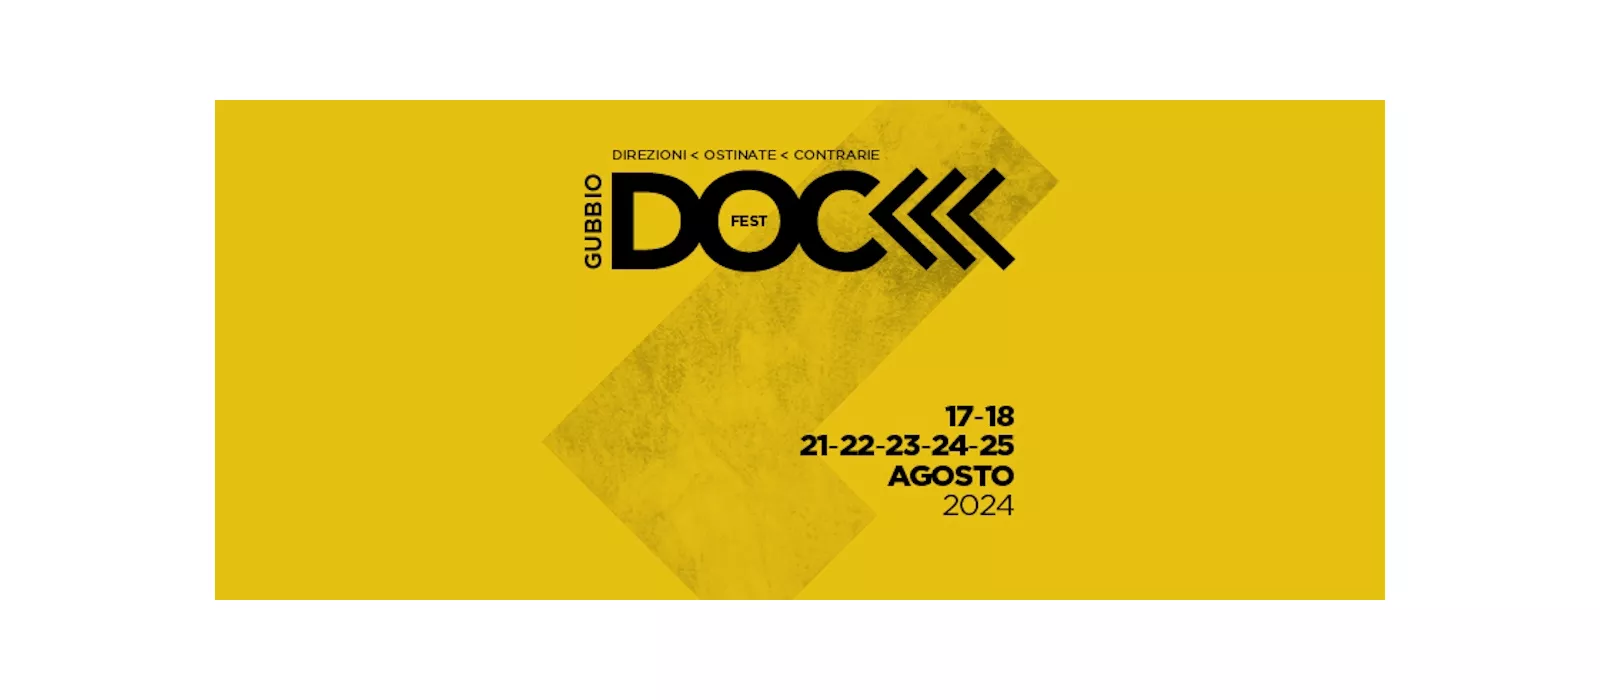 Gubbio DOC Fest 2024